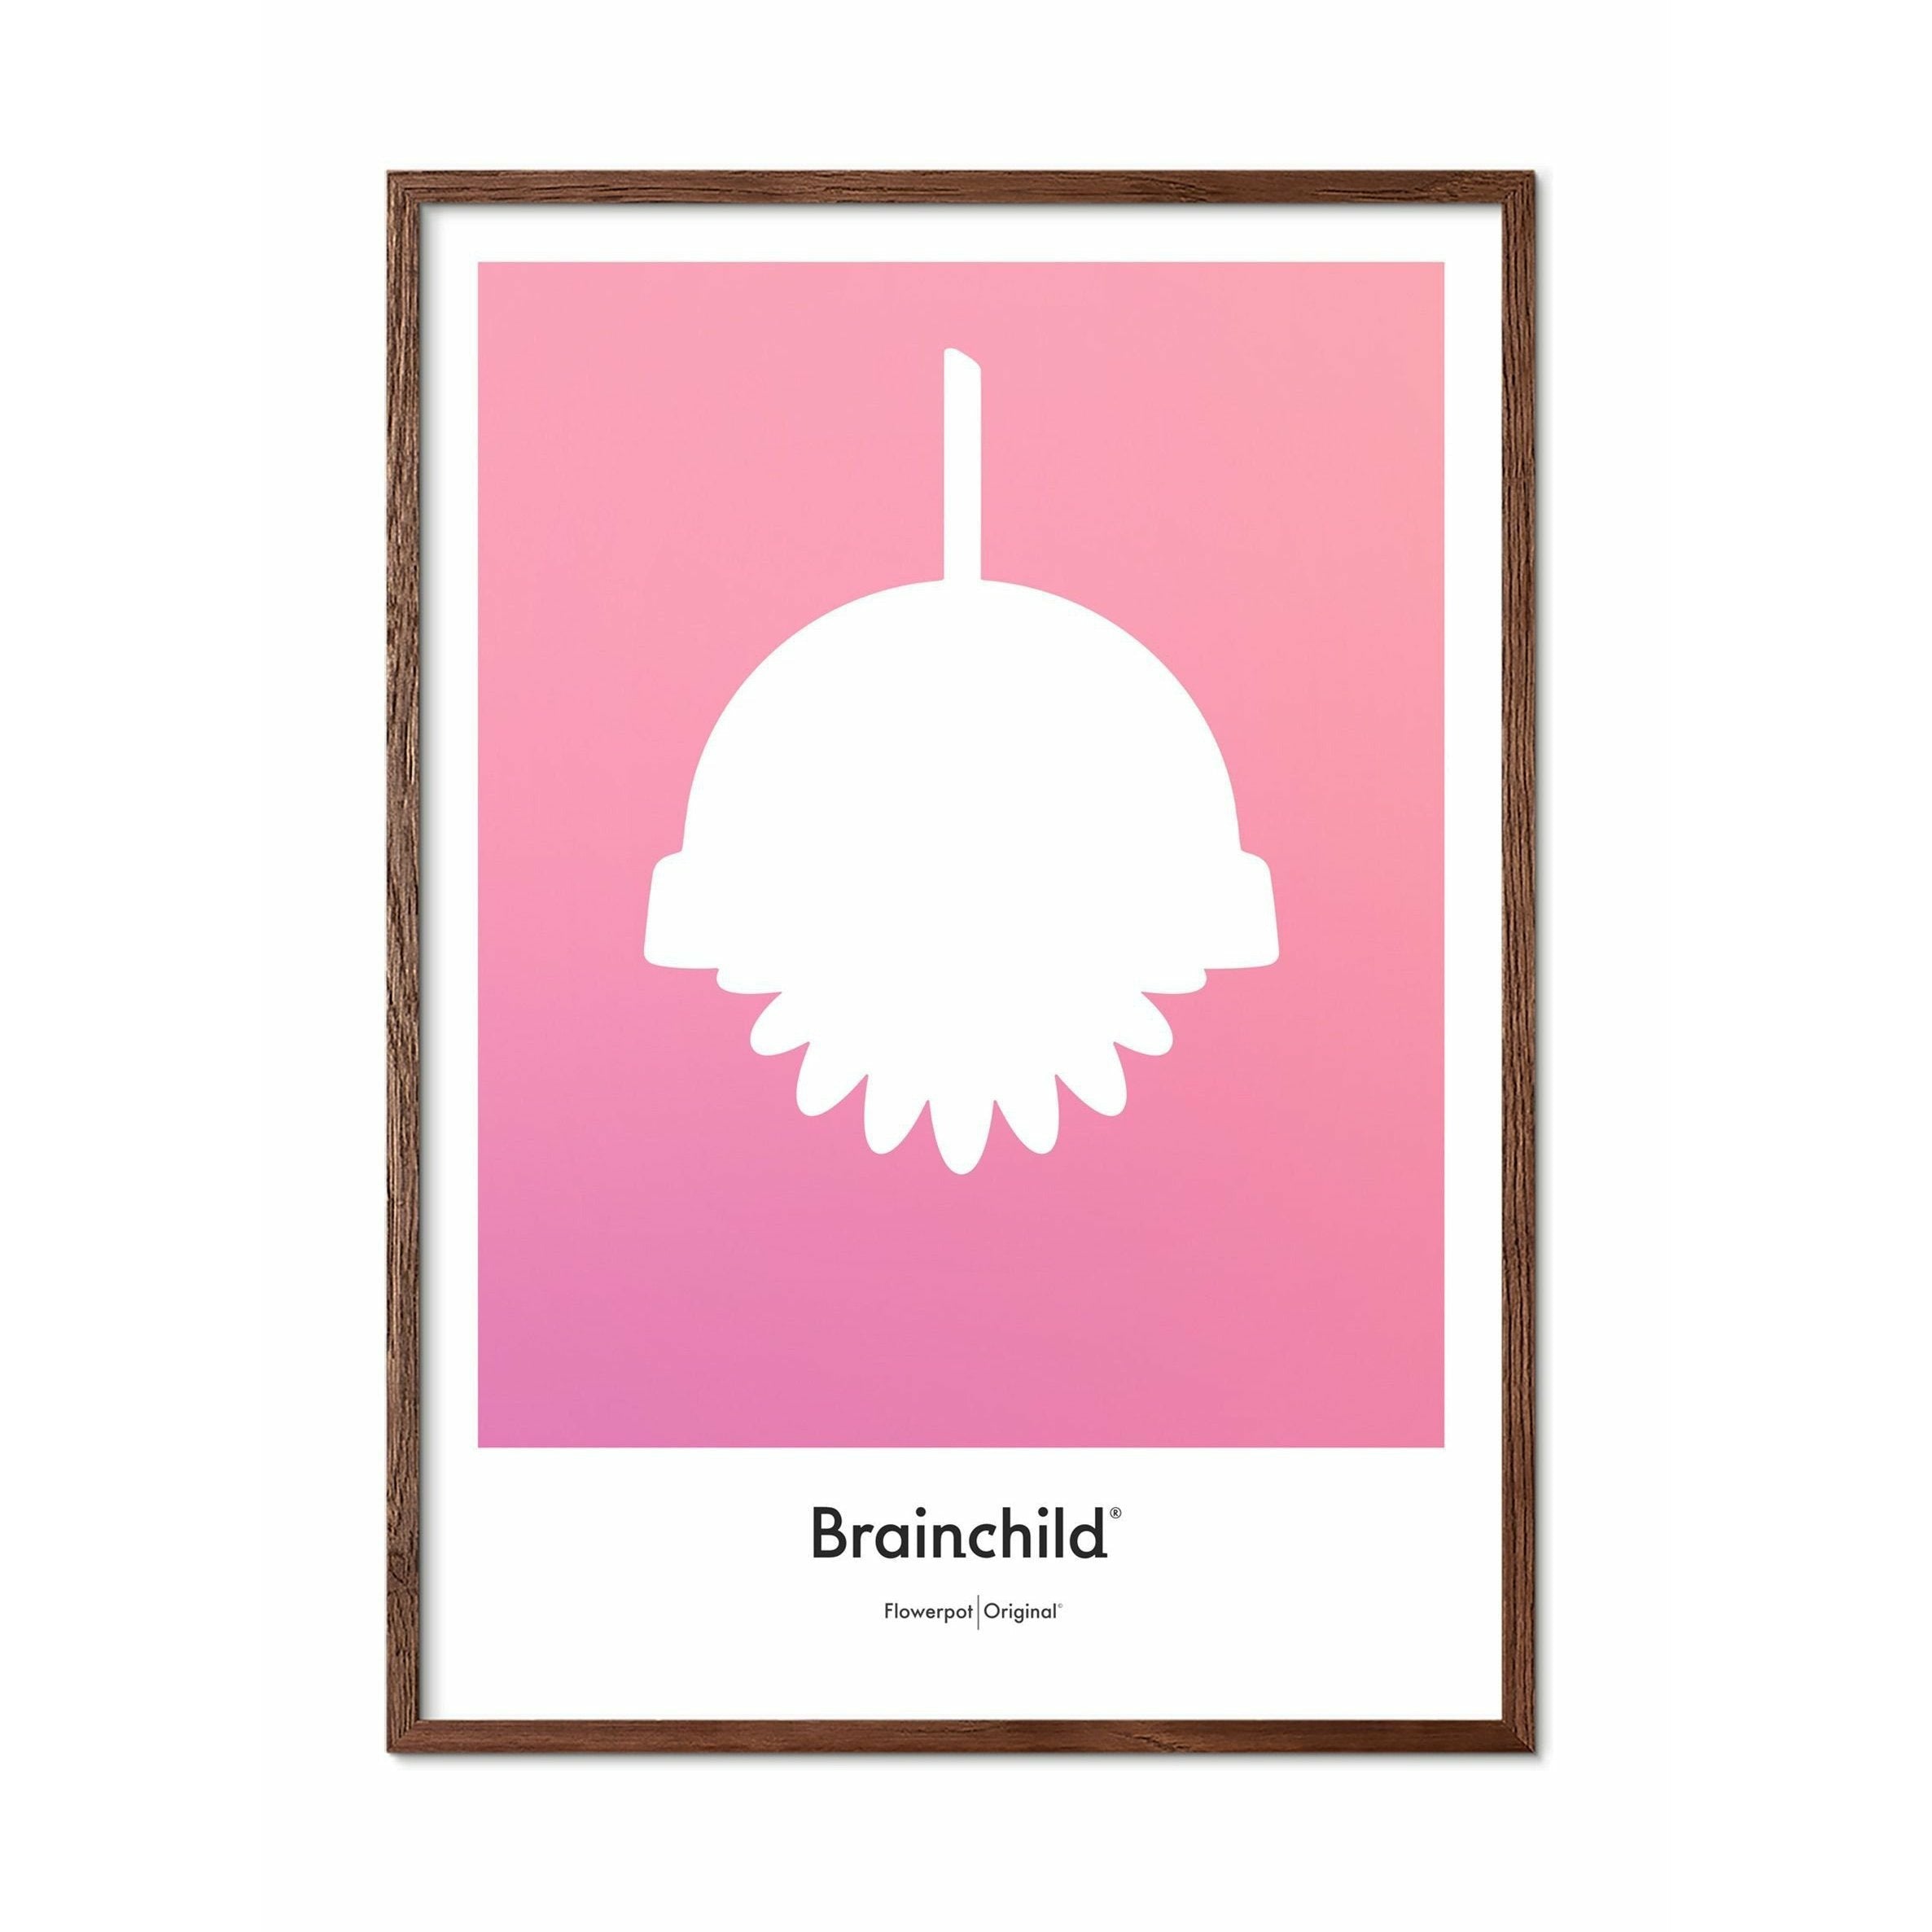 Brainchild Flowerpot Designikon Plakat, Ramme I Mørkt Træ 70X100 Cm, Rosa